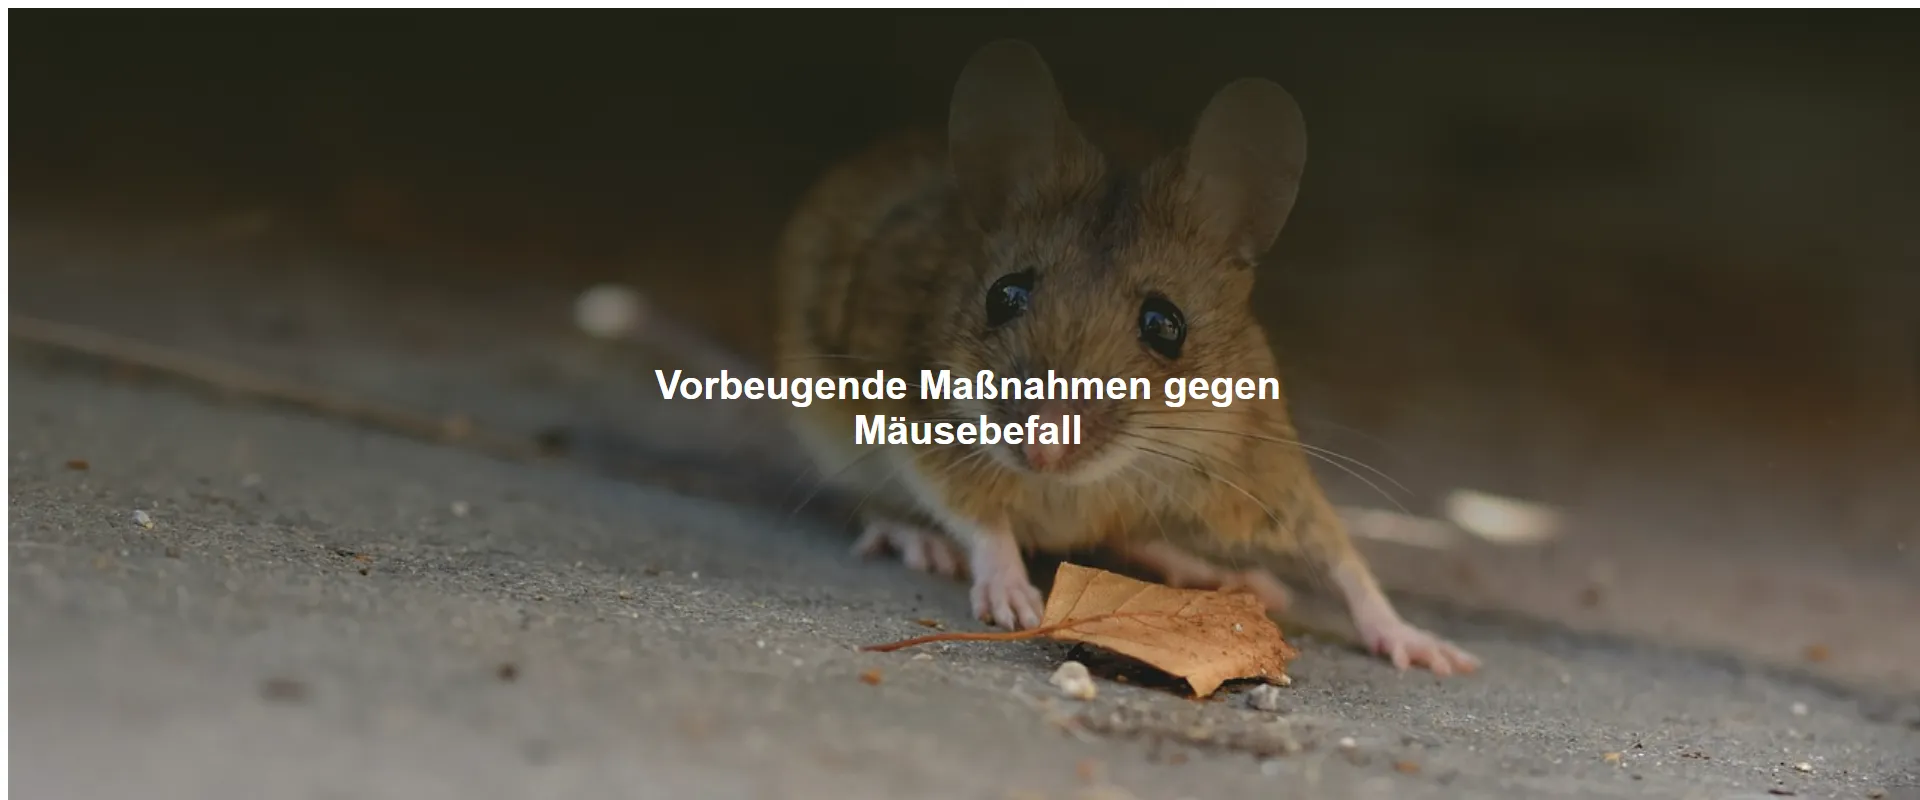 Vorbeugende Maßnahmen gegen Mäusebefall